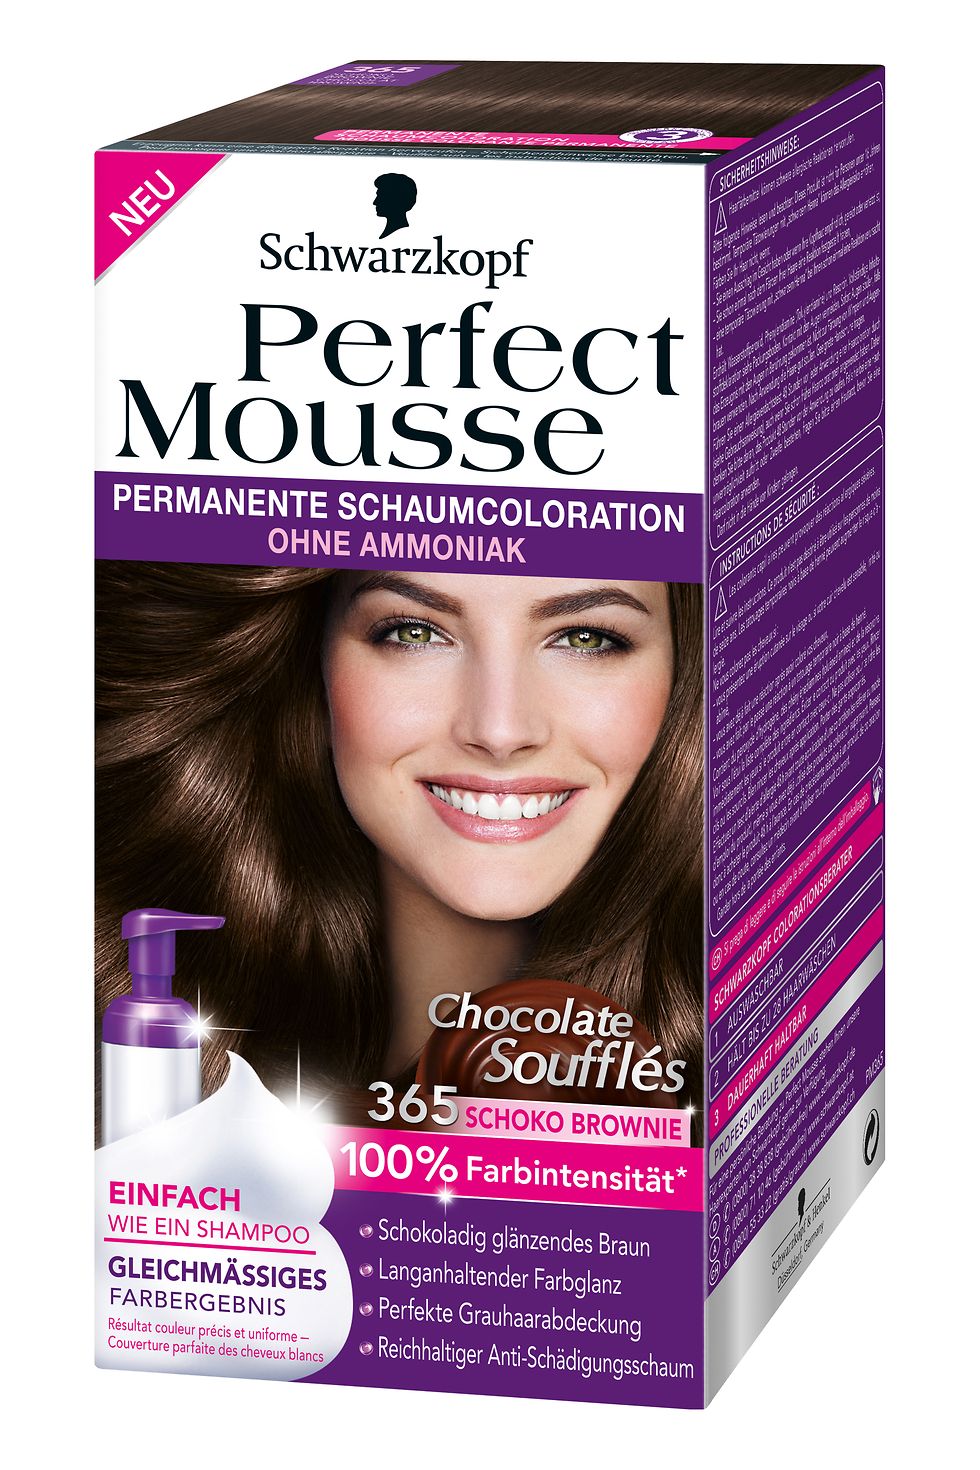 Perfect Mousse Chocolate Soufflés 365 Schoko Brownie